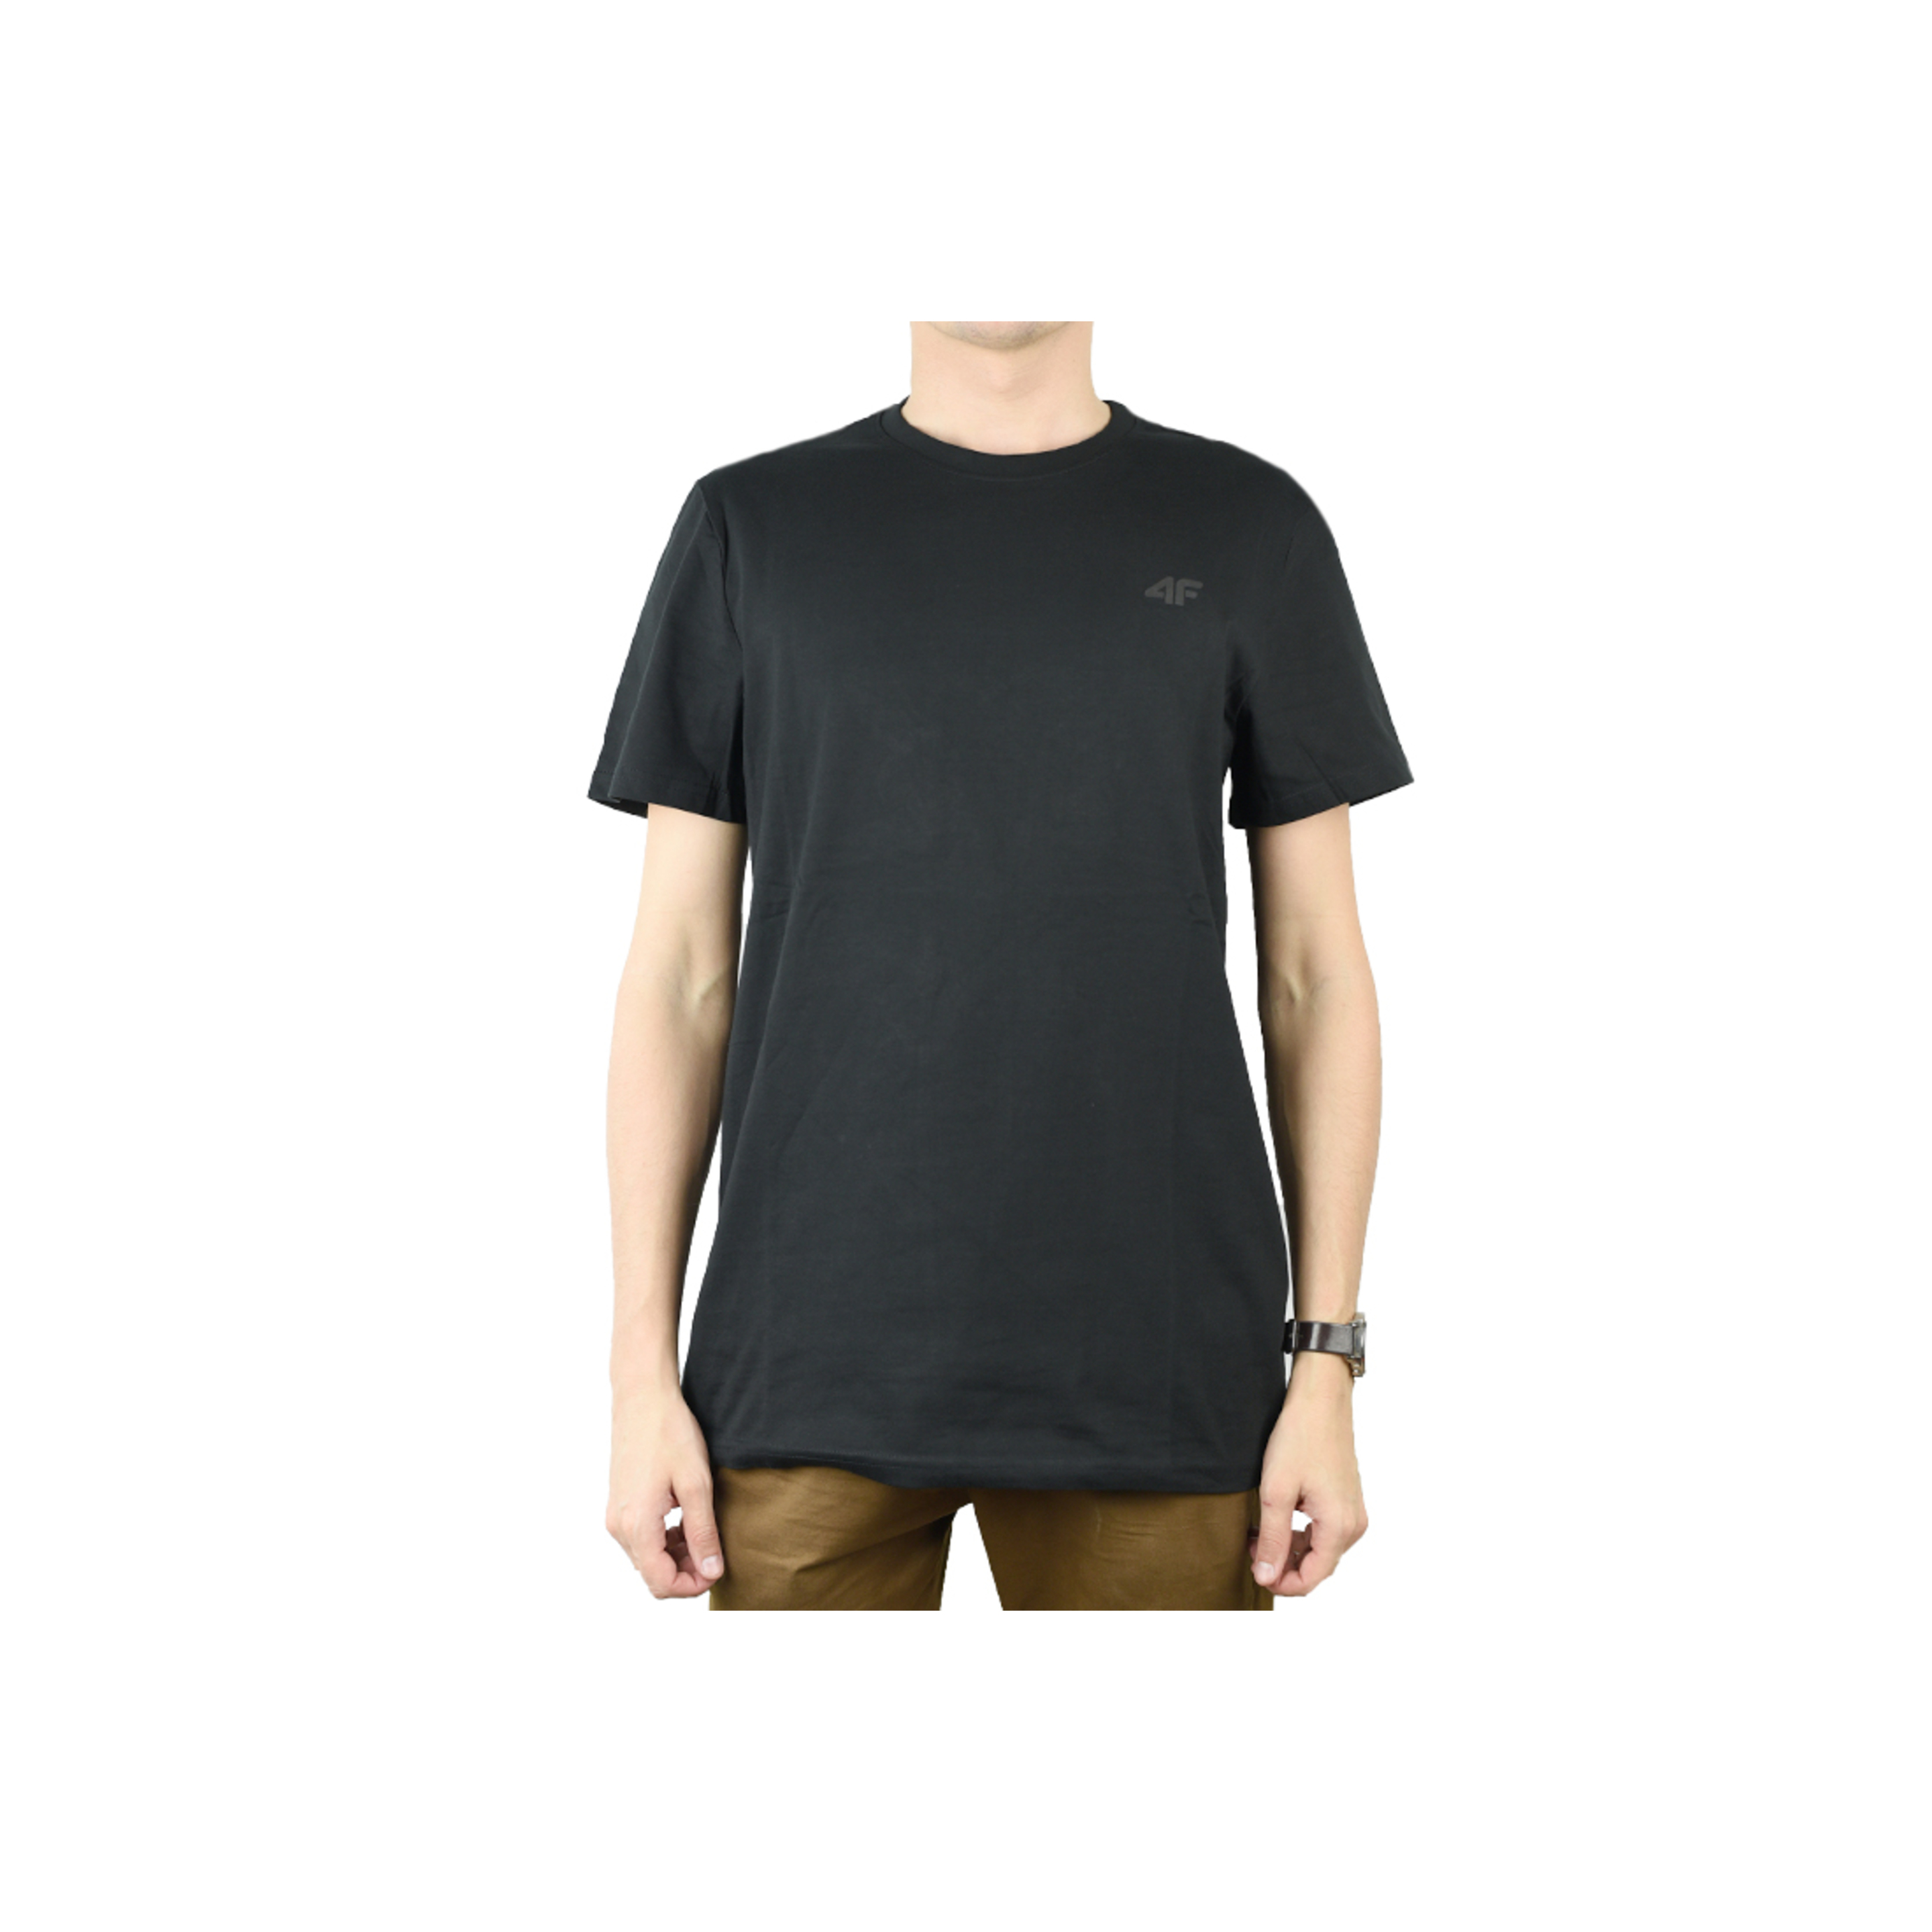 4f Men's T-shirt Nosh4-tsm003-20s - negro - 